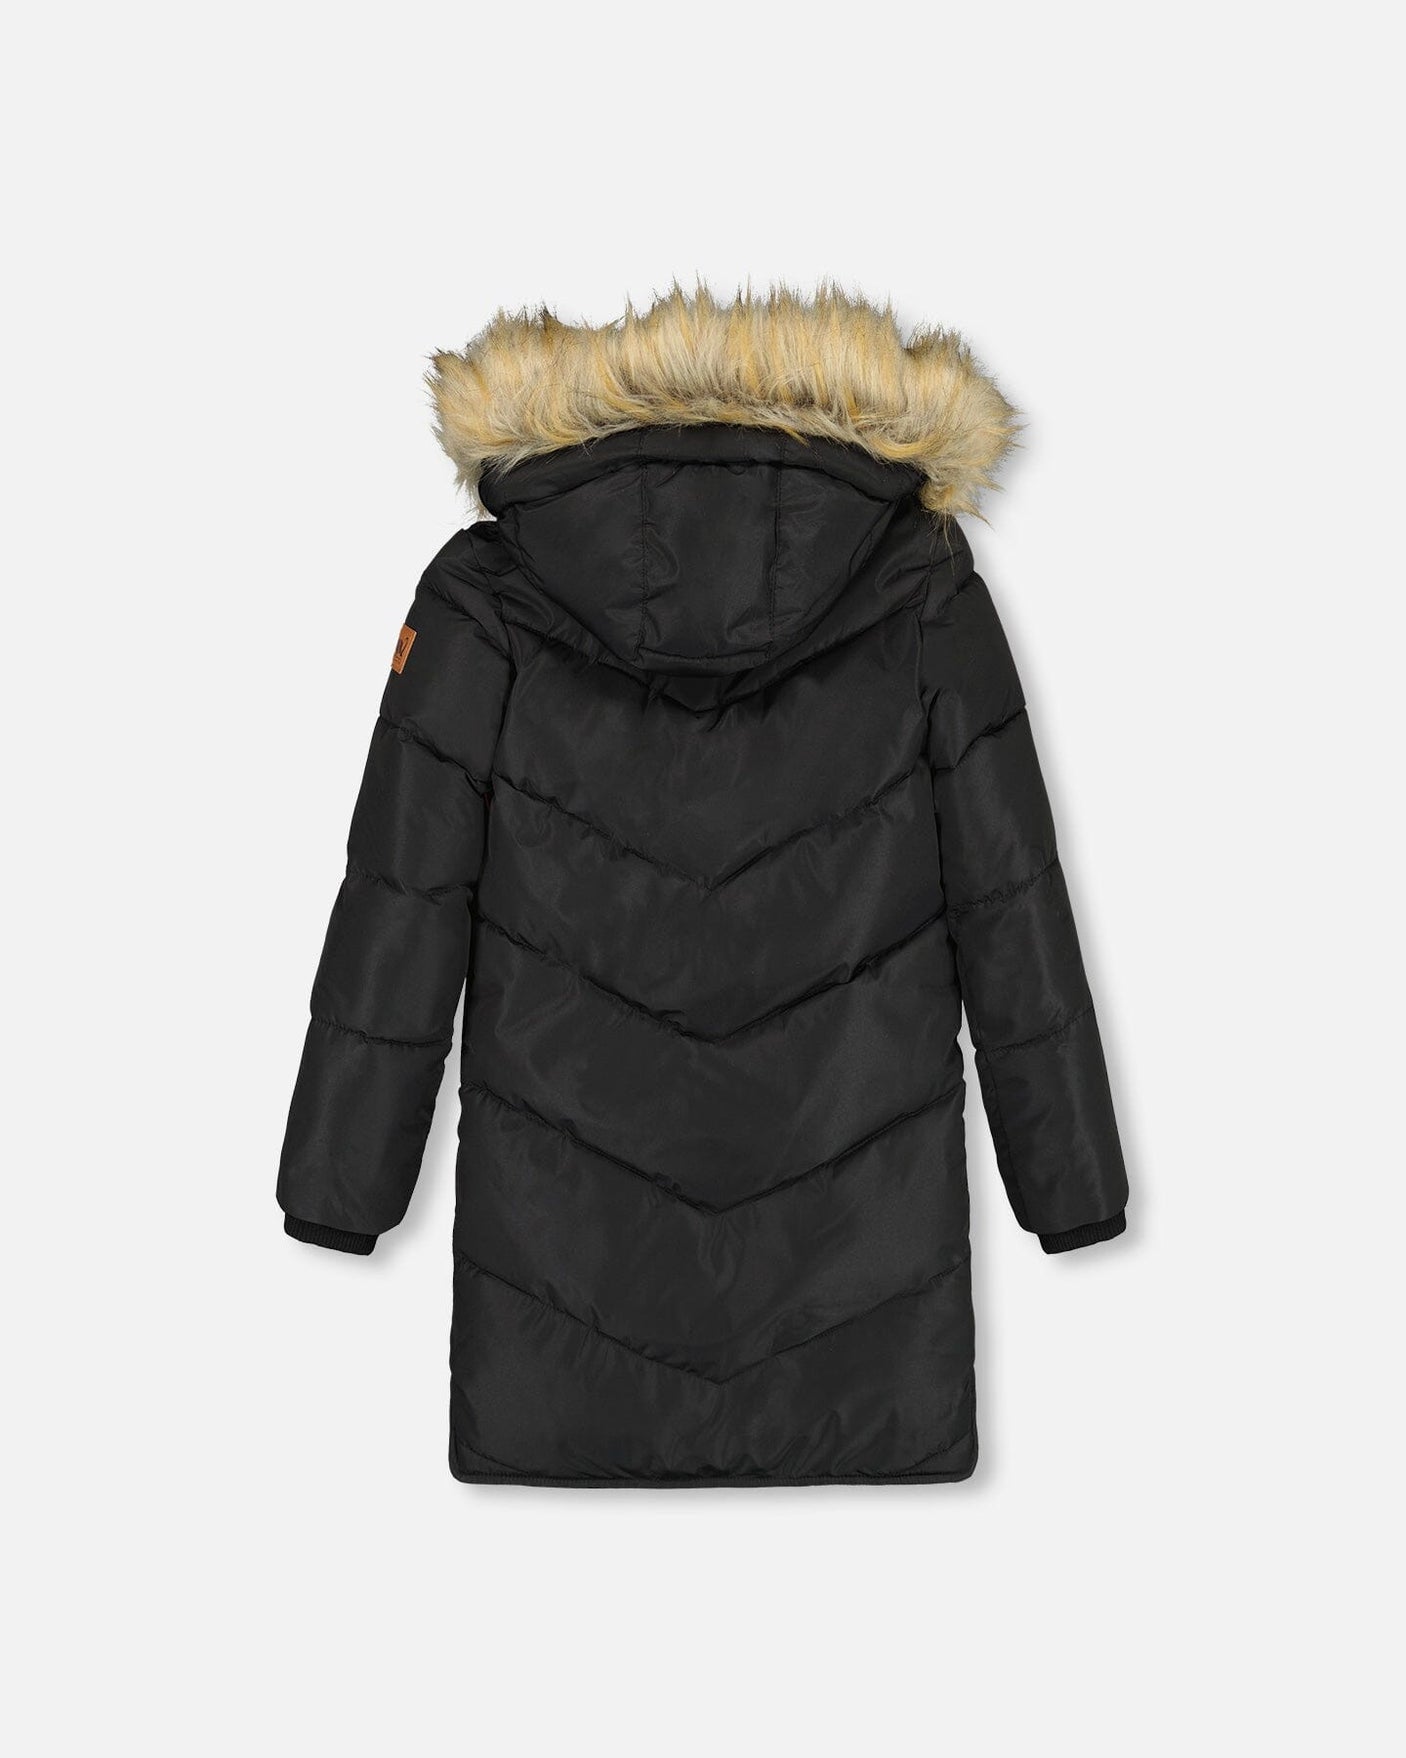 Puffy Long Coat Black-2